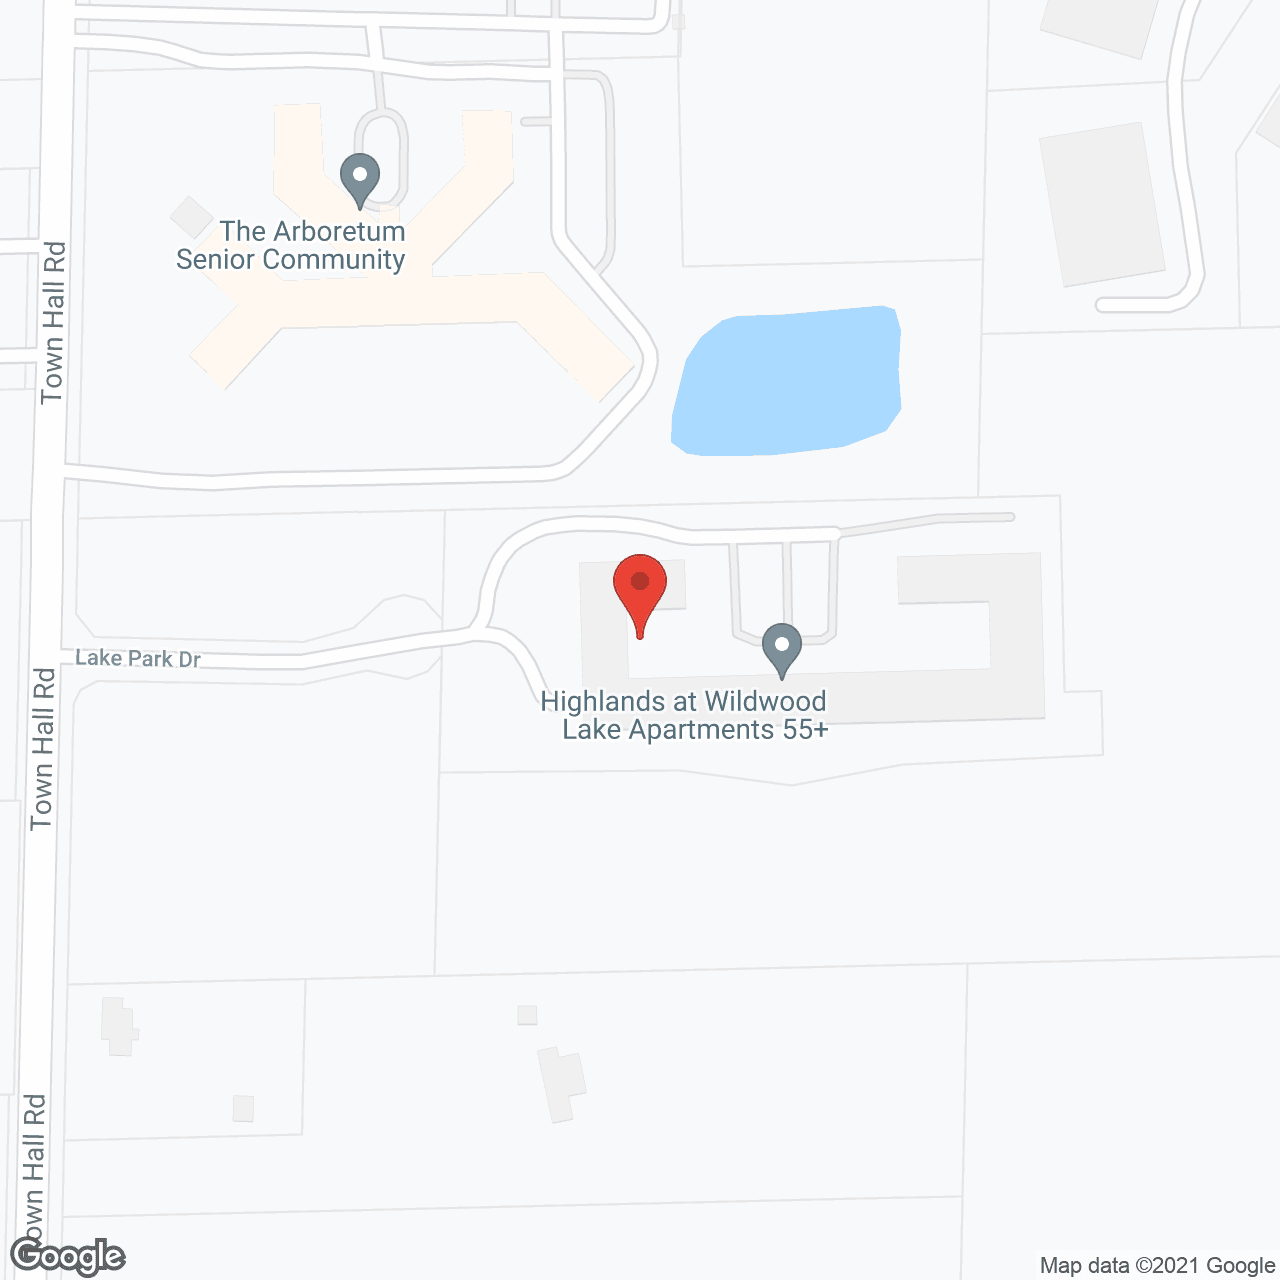 Highlands at Wildwood Lake Apartments 55+ in google map